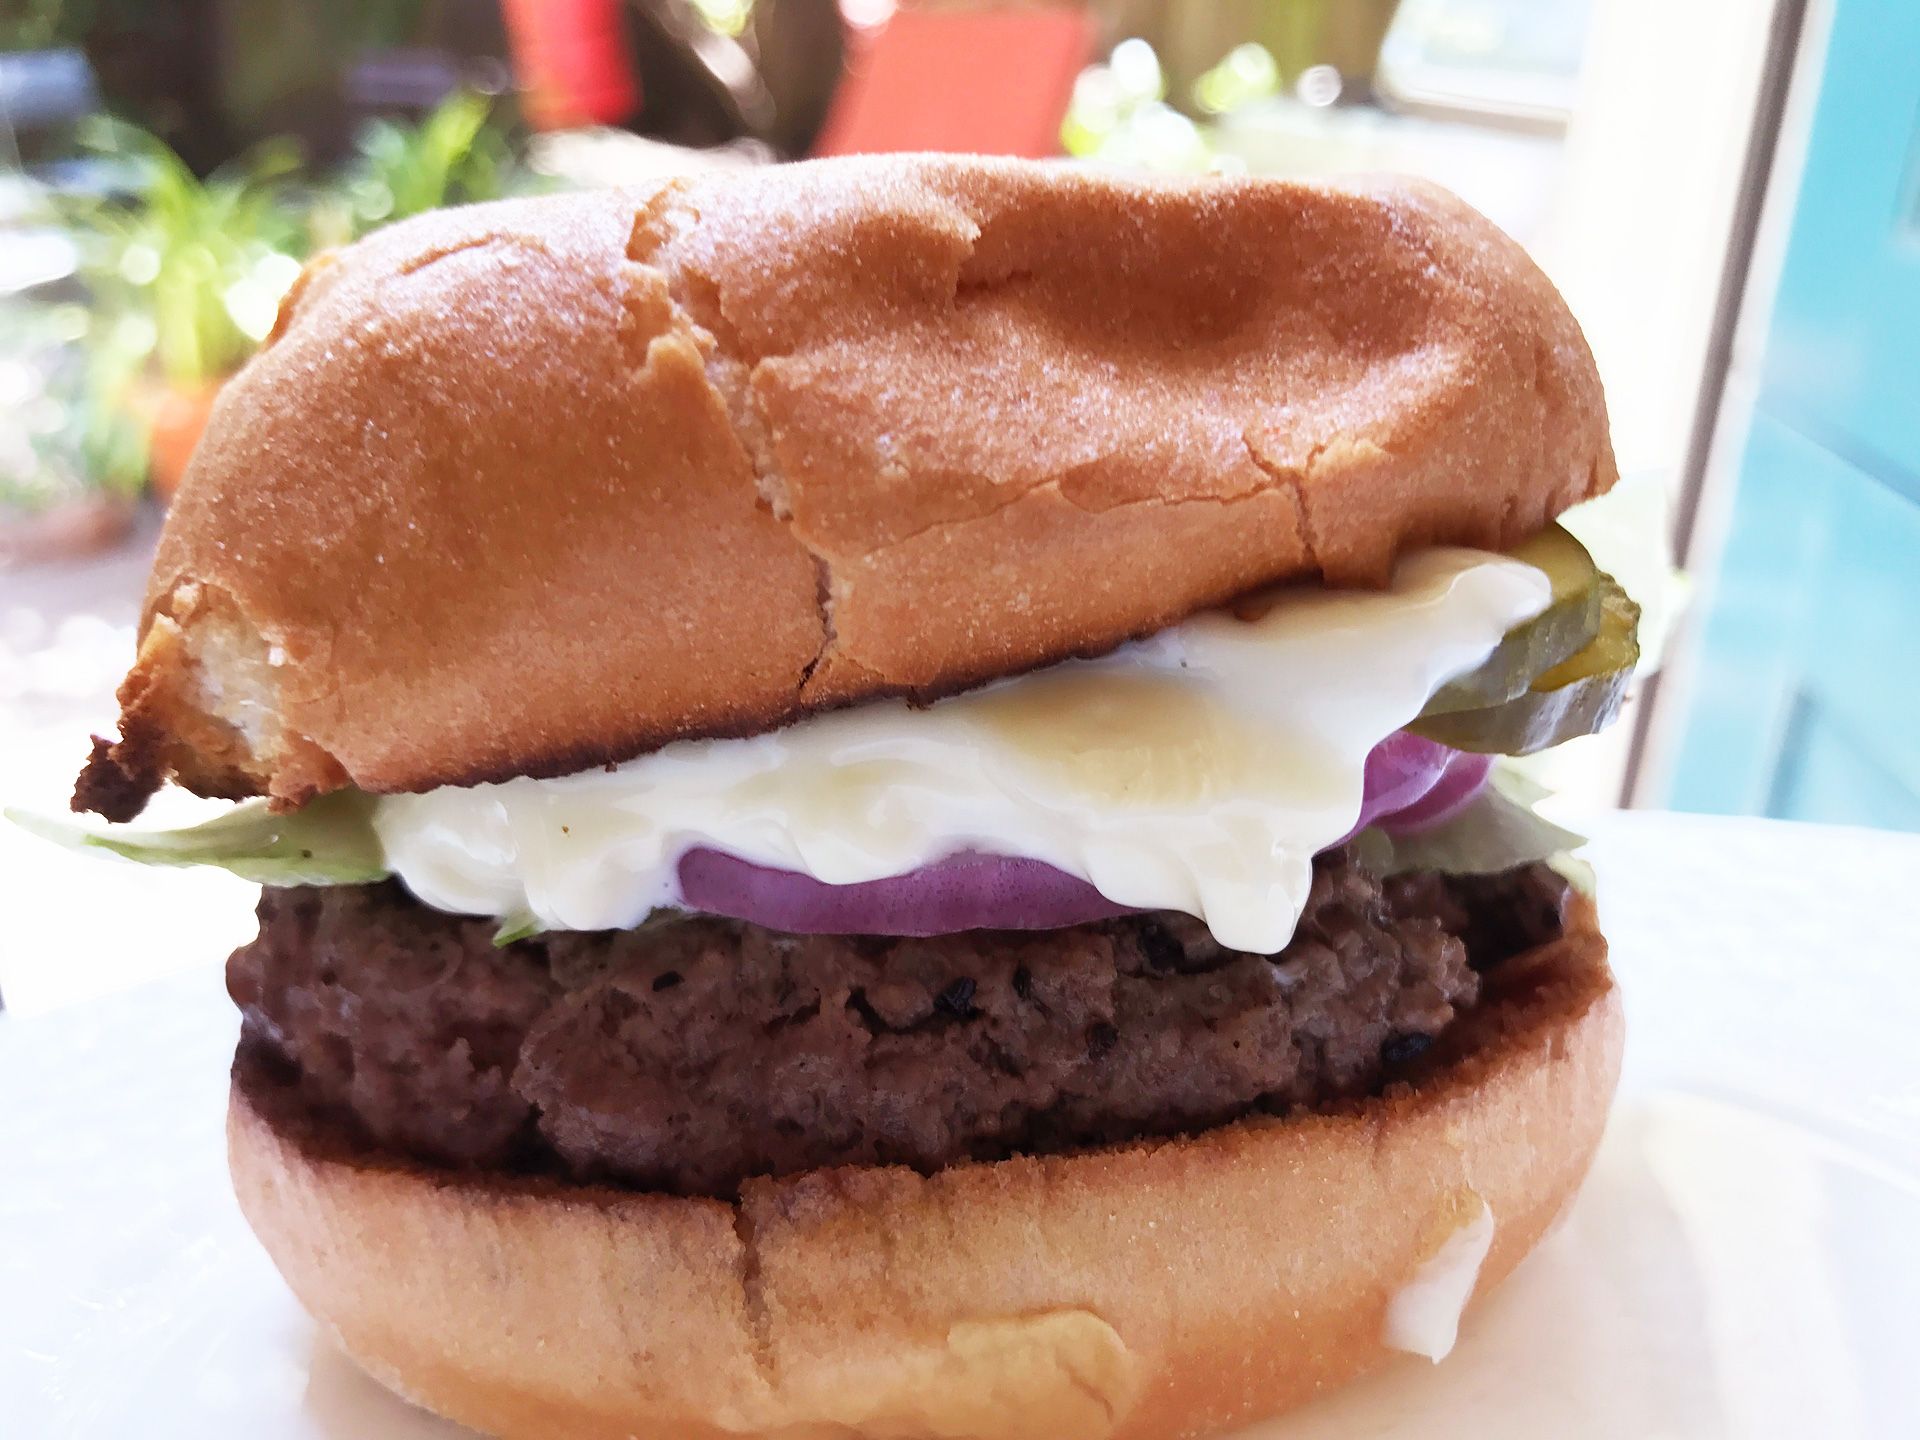 The Farm Burger with a gluten-free bun.